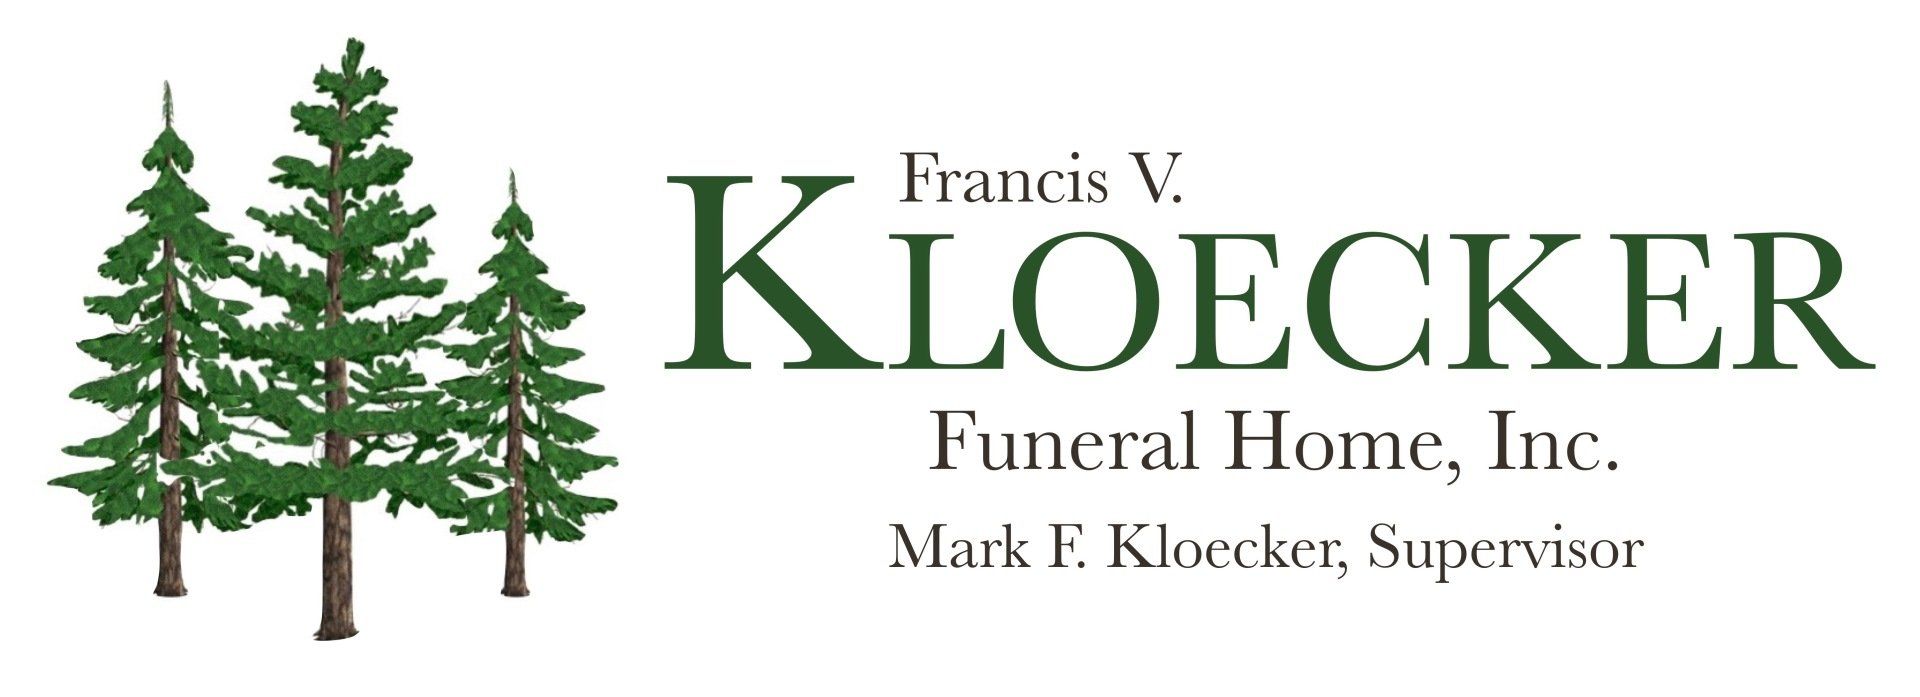 Francis V. Kloecker Funeral Home, Inc. Logo